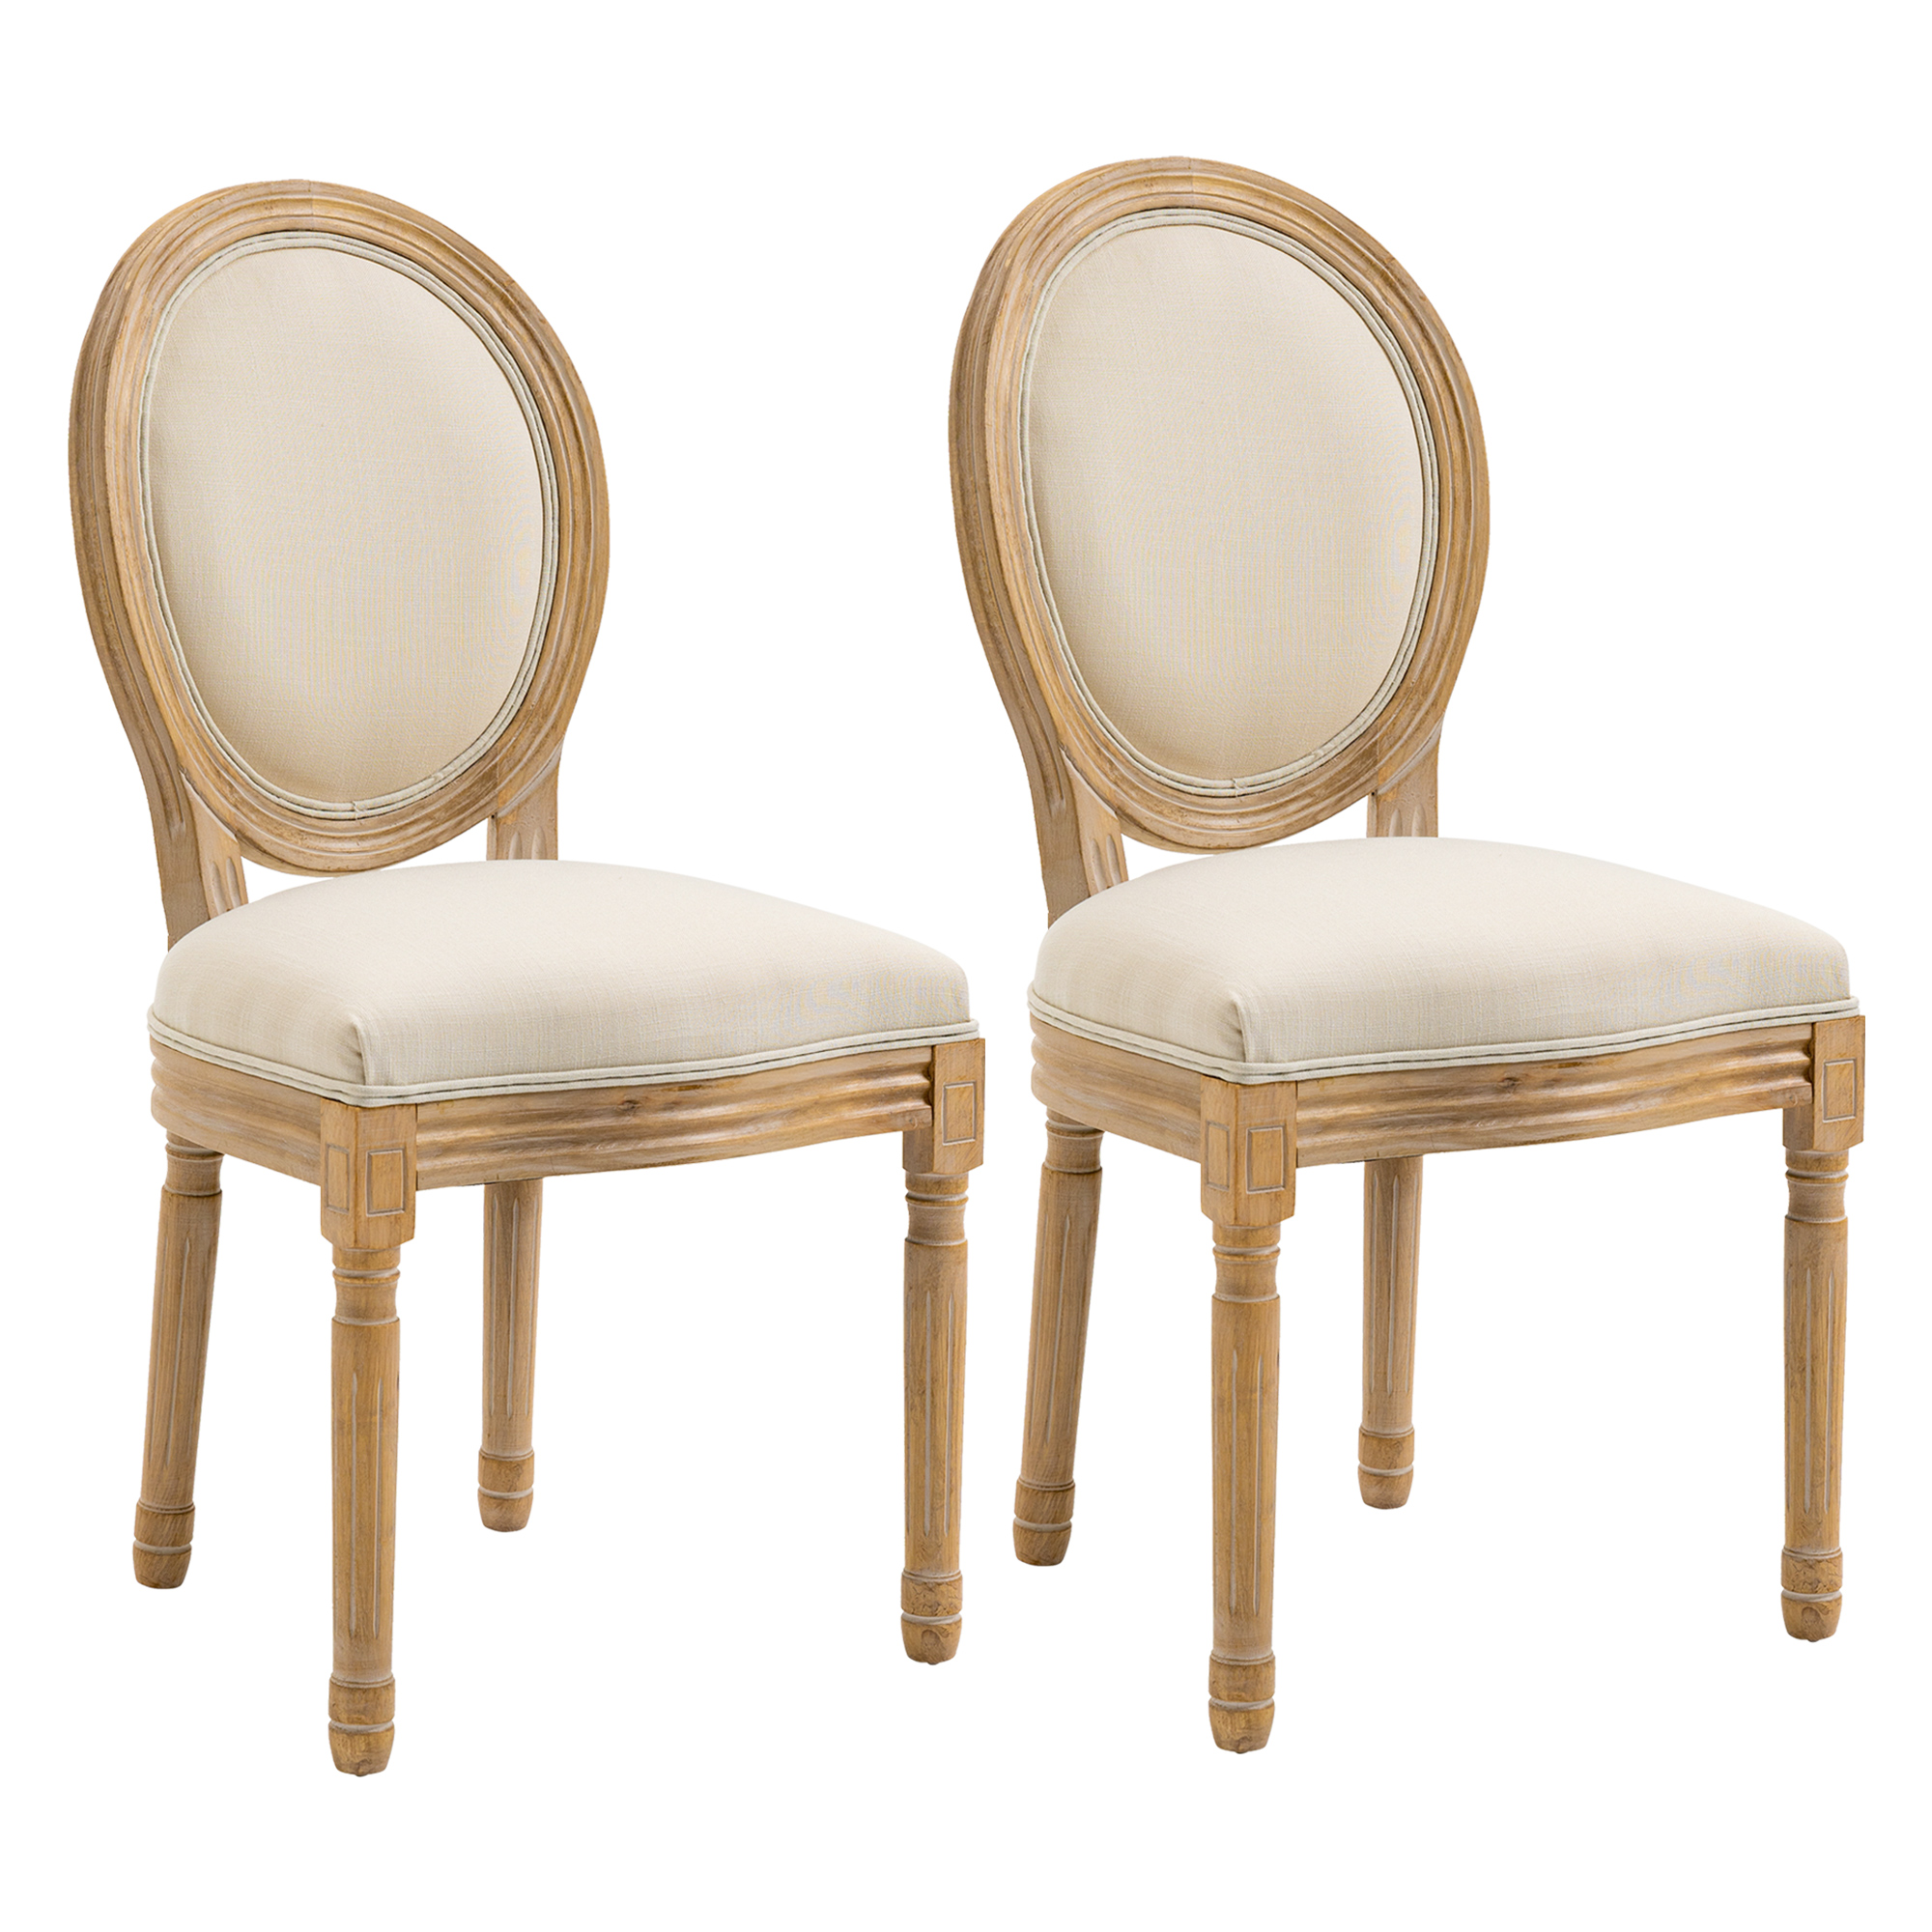 HOMCOM Σετ 2 Επενδυμένες Καρέκλες για Σαλόνι Vintage R? Tro Style σε Ξύλο και Ύφασμα 49x56x96cm - Λευκό